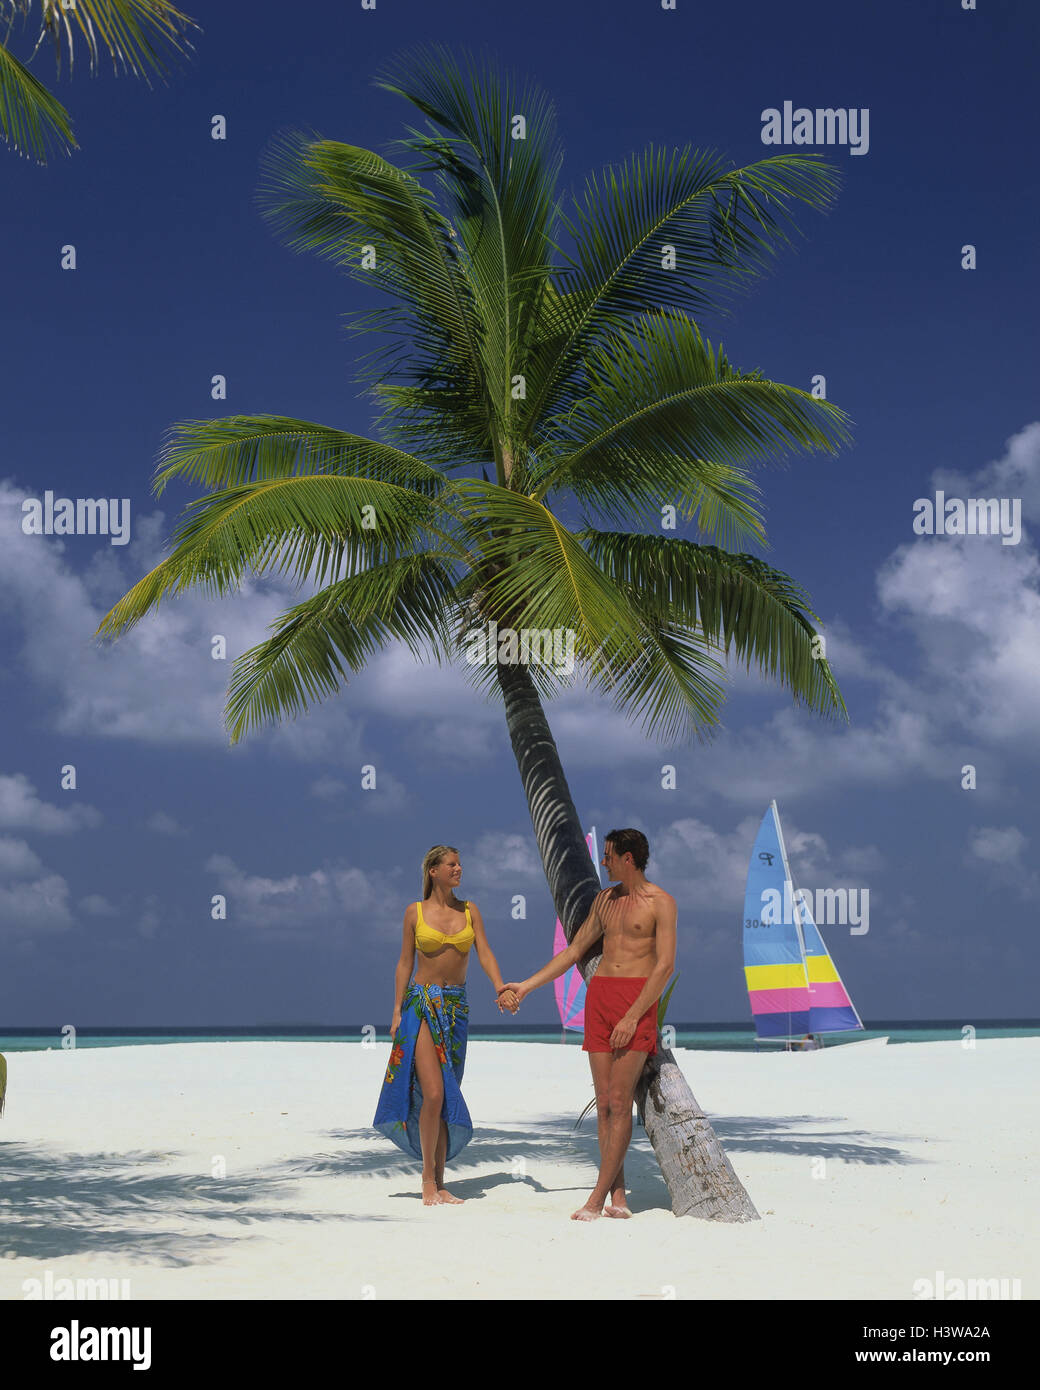 Paar, Strand, Palmen, Frau, Mann, Paero, Badehose, Katamaran, der Malediven, bewölkter Himmel, weißer Strand, draußen Stockfoto